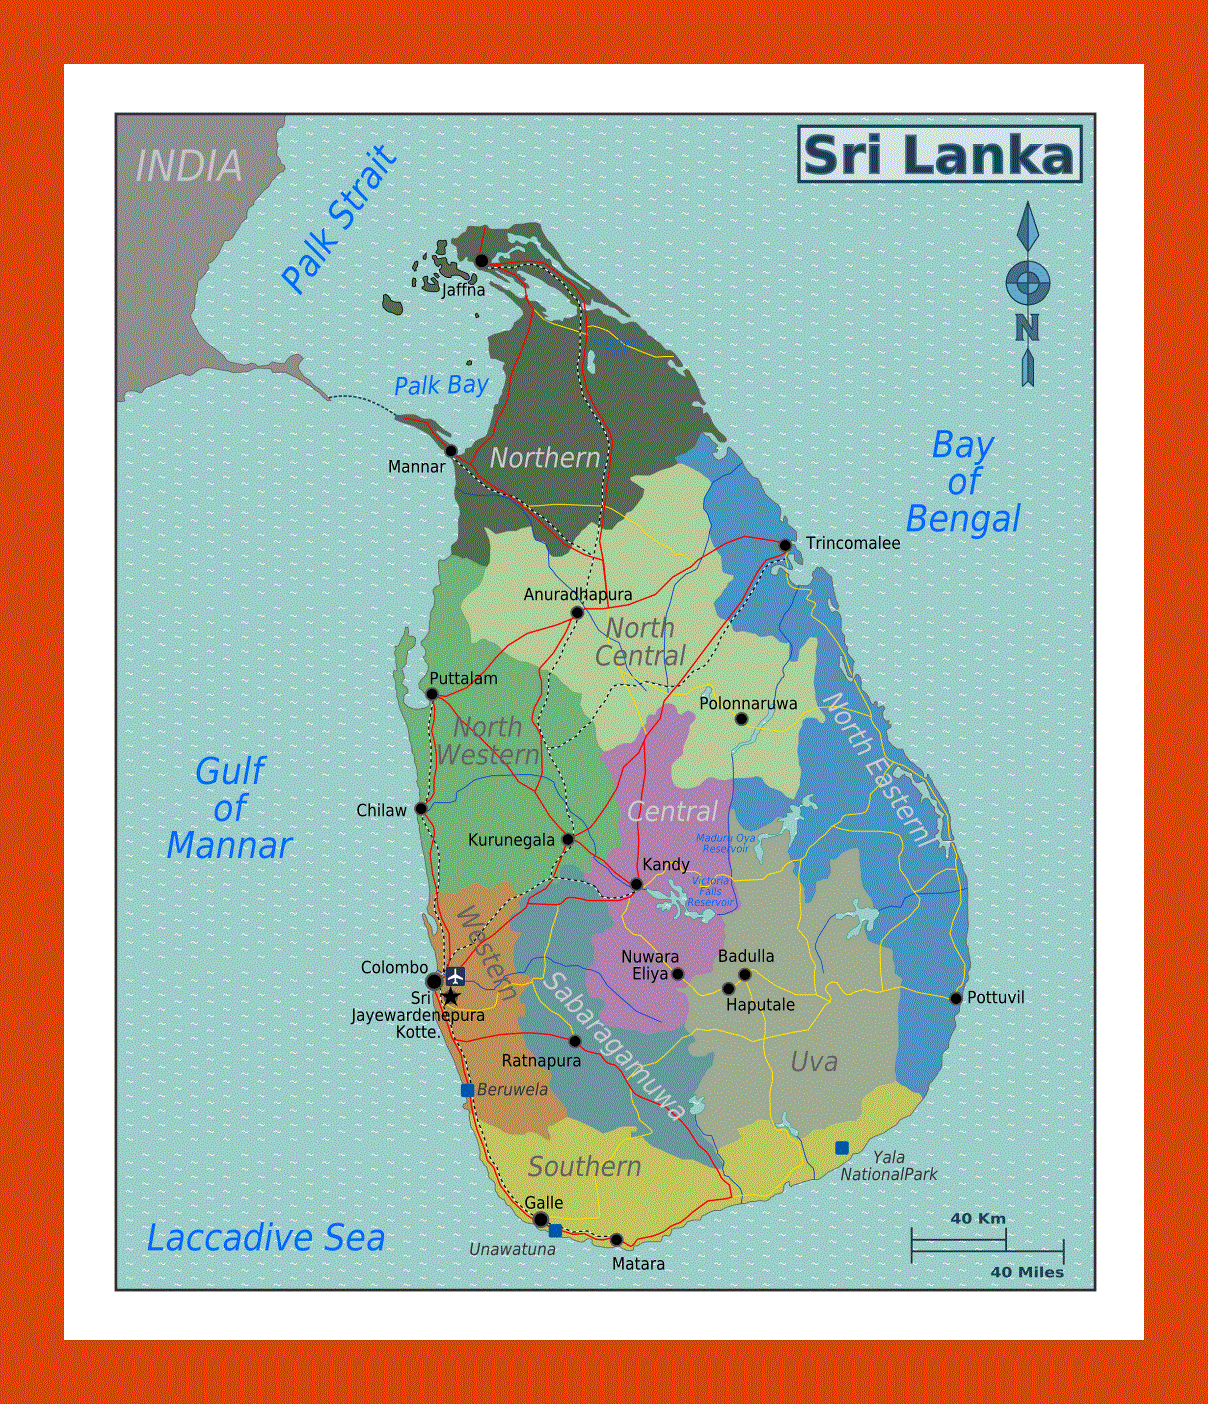 Regions map of Sri Lanka